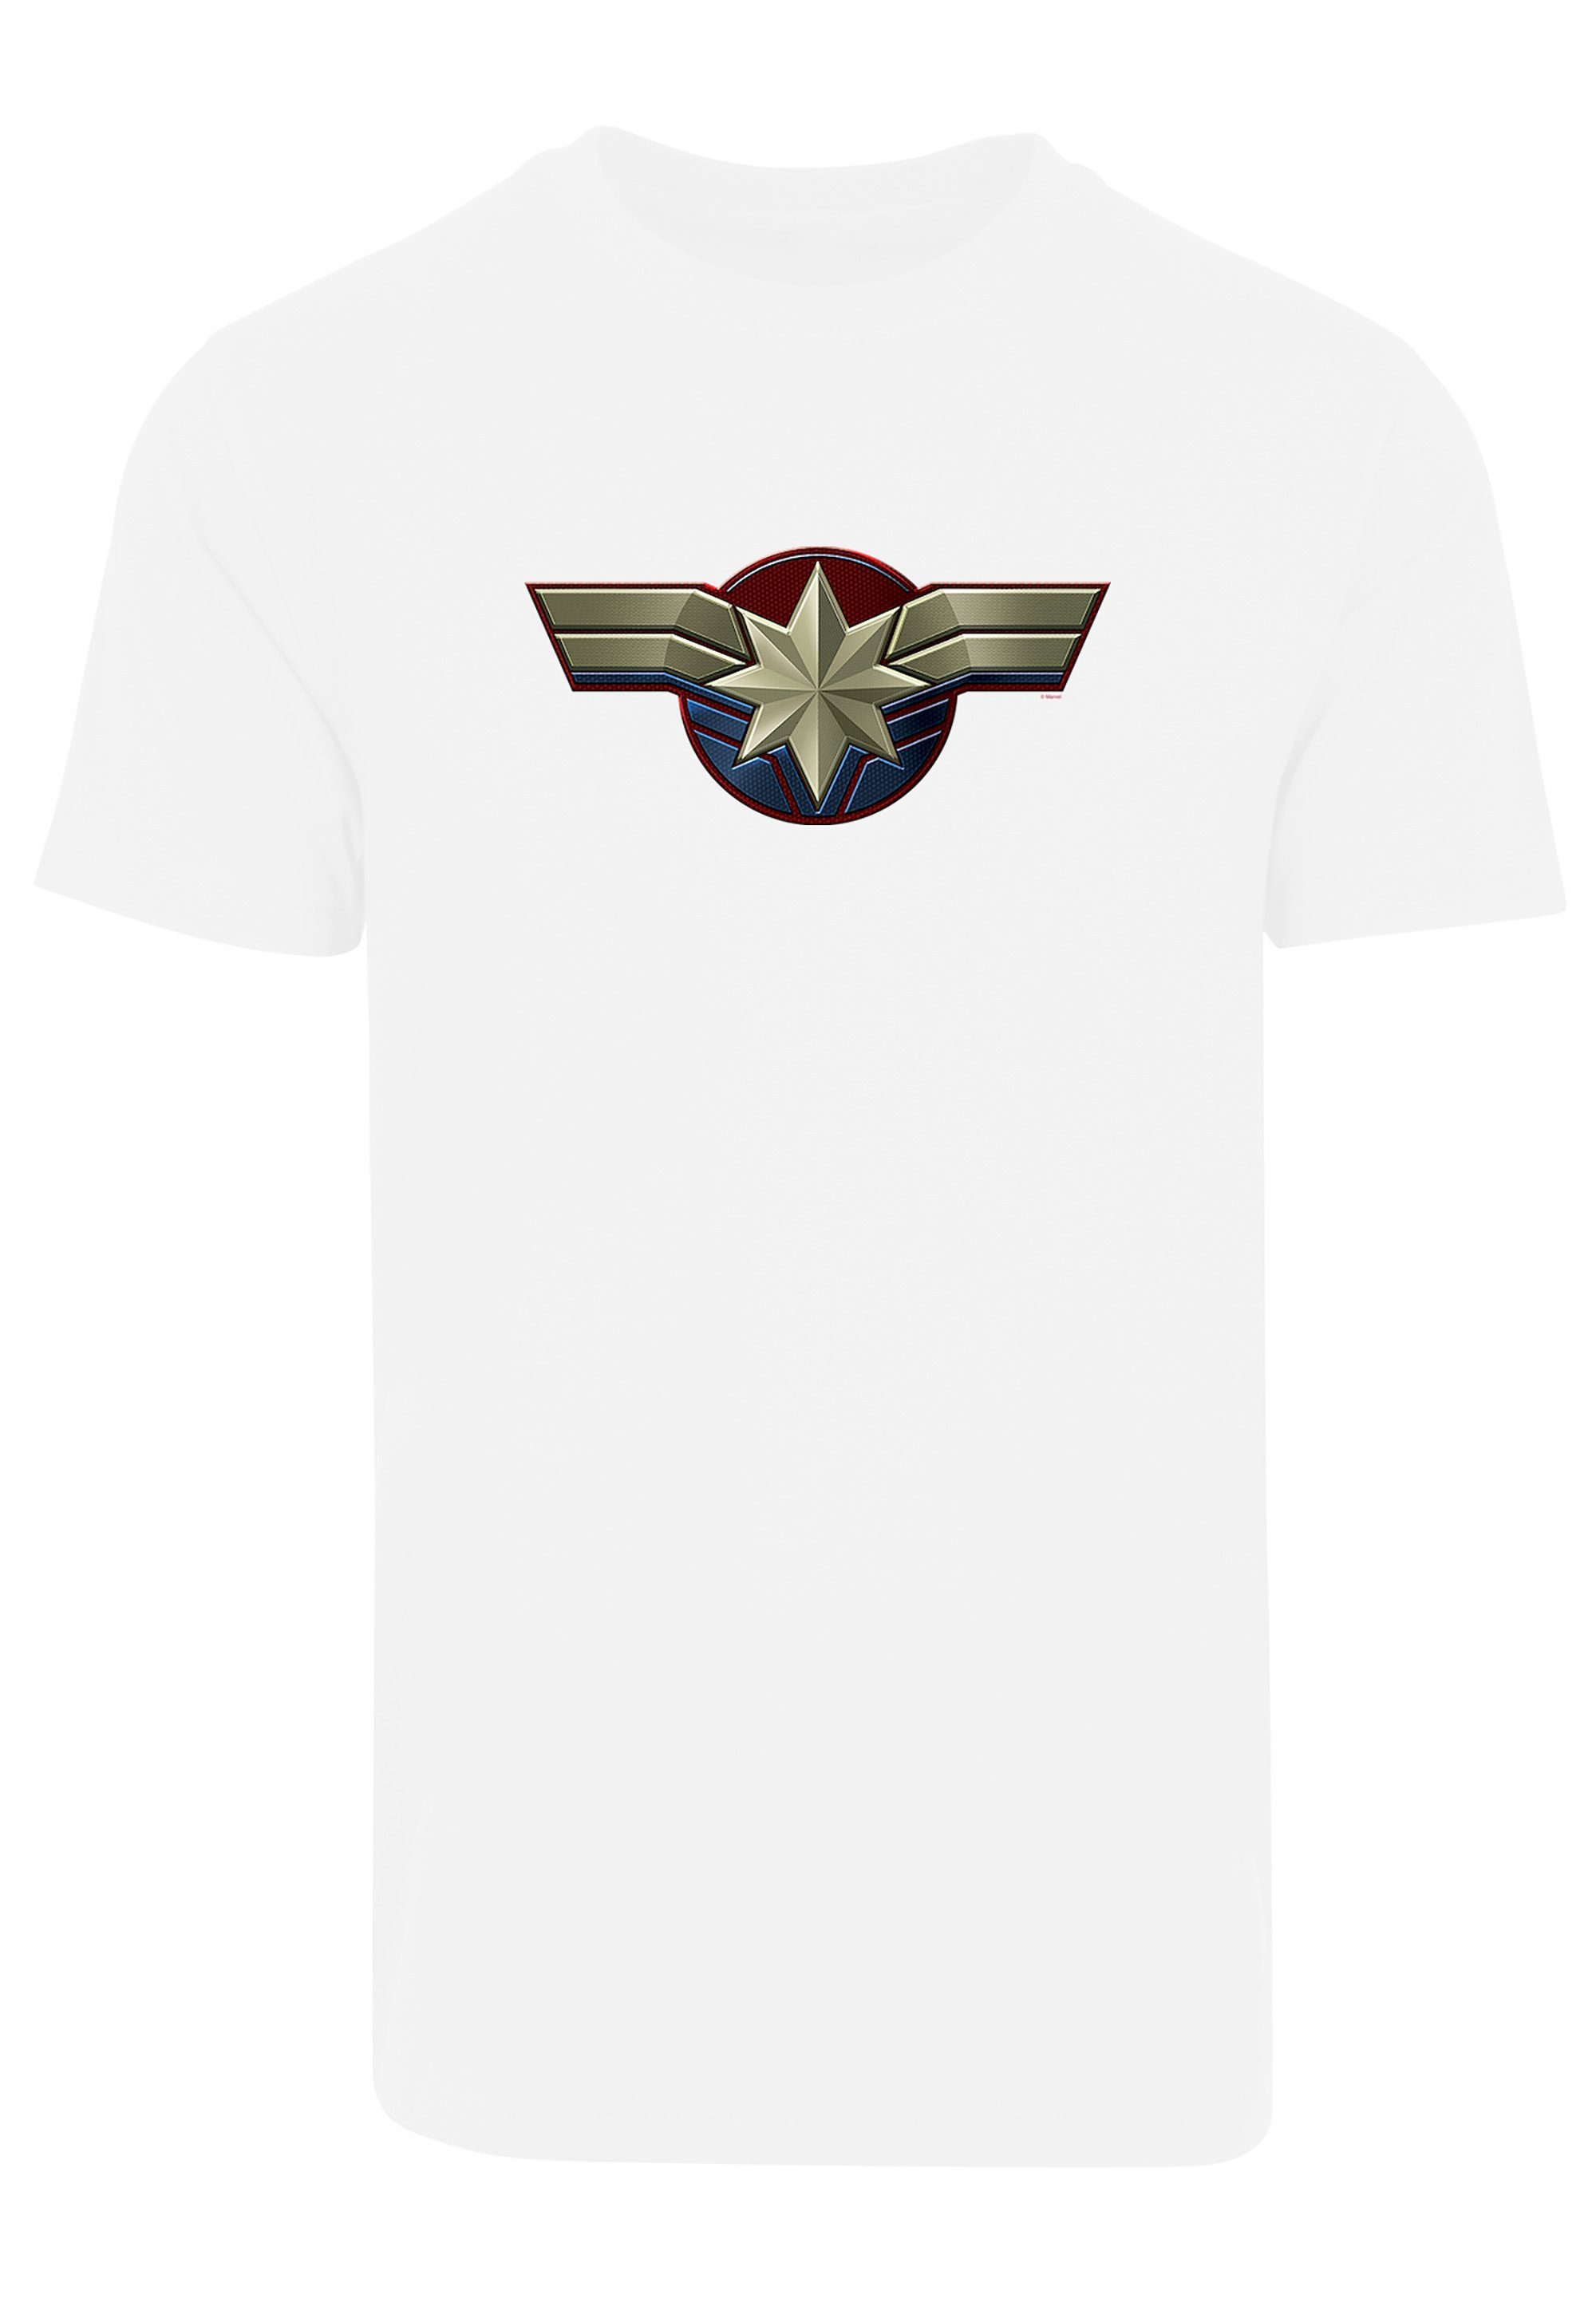 weiß T-Shirt Print Marvel F4NT4STIC Chest Emblem Captain Marvel